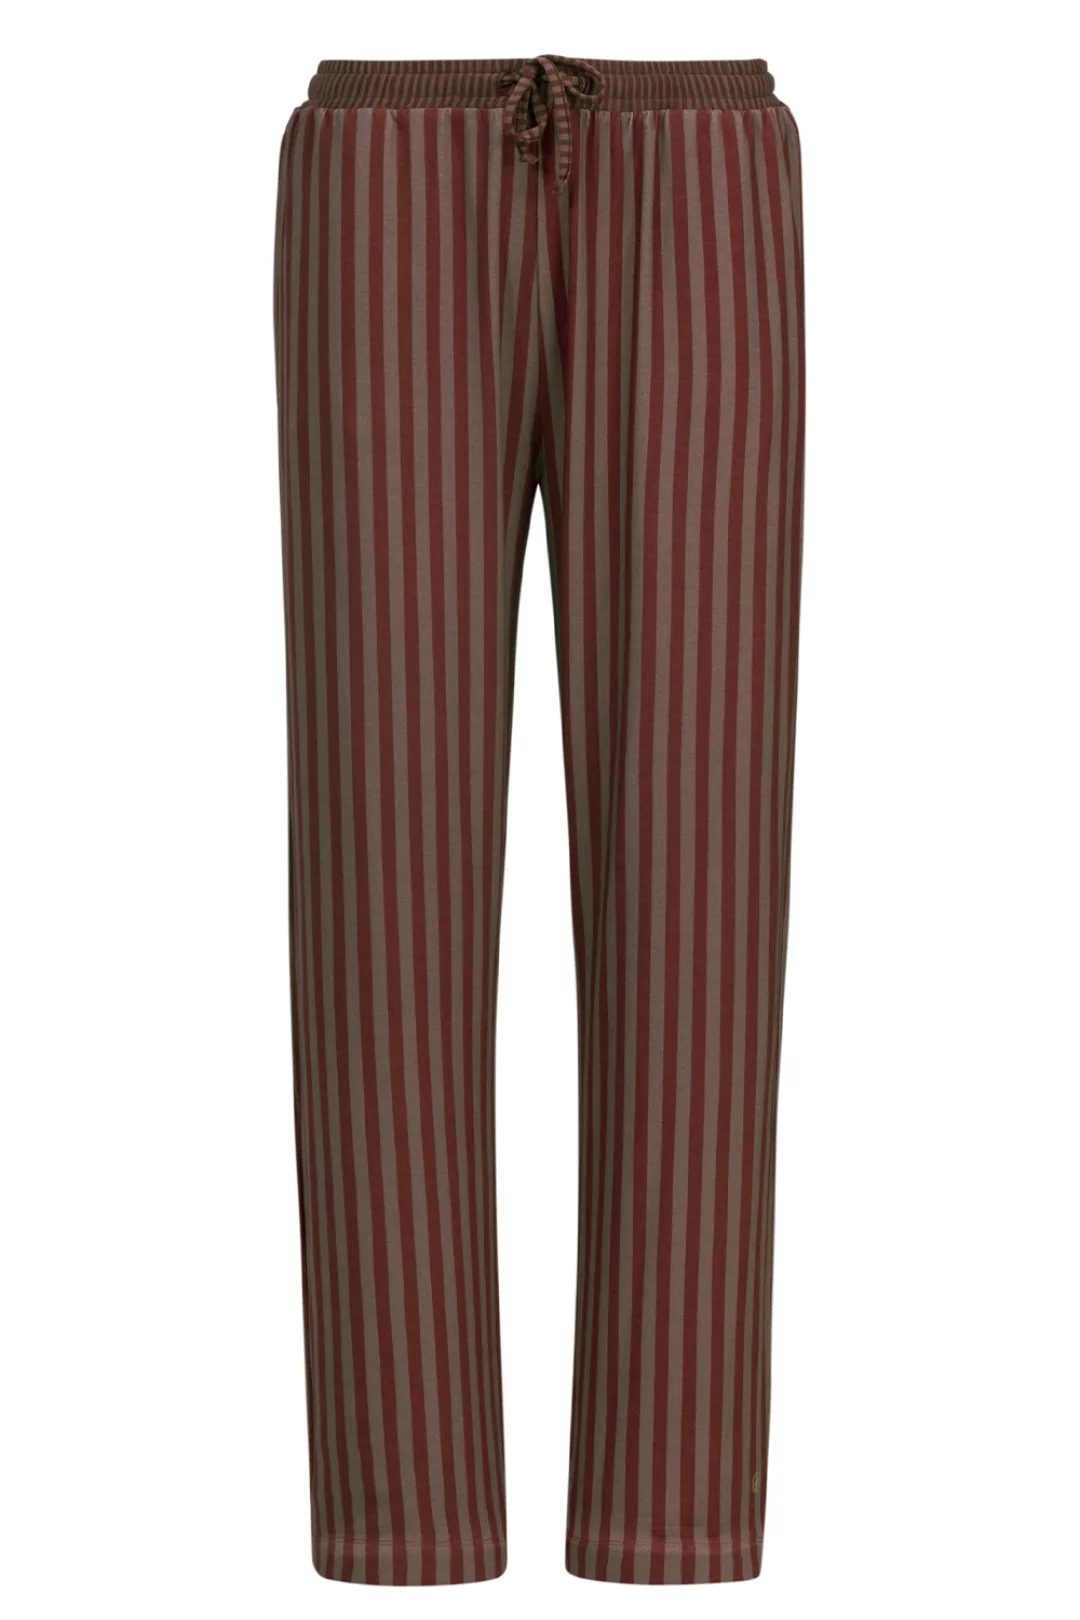 Pip Studio Belin Sumo Hose lang stripe Loungewear 2 38 mehrfarbig günstig online kaufen